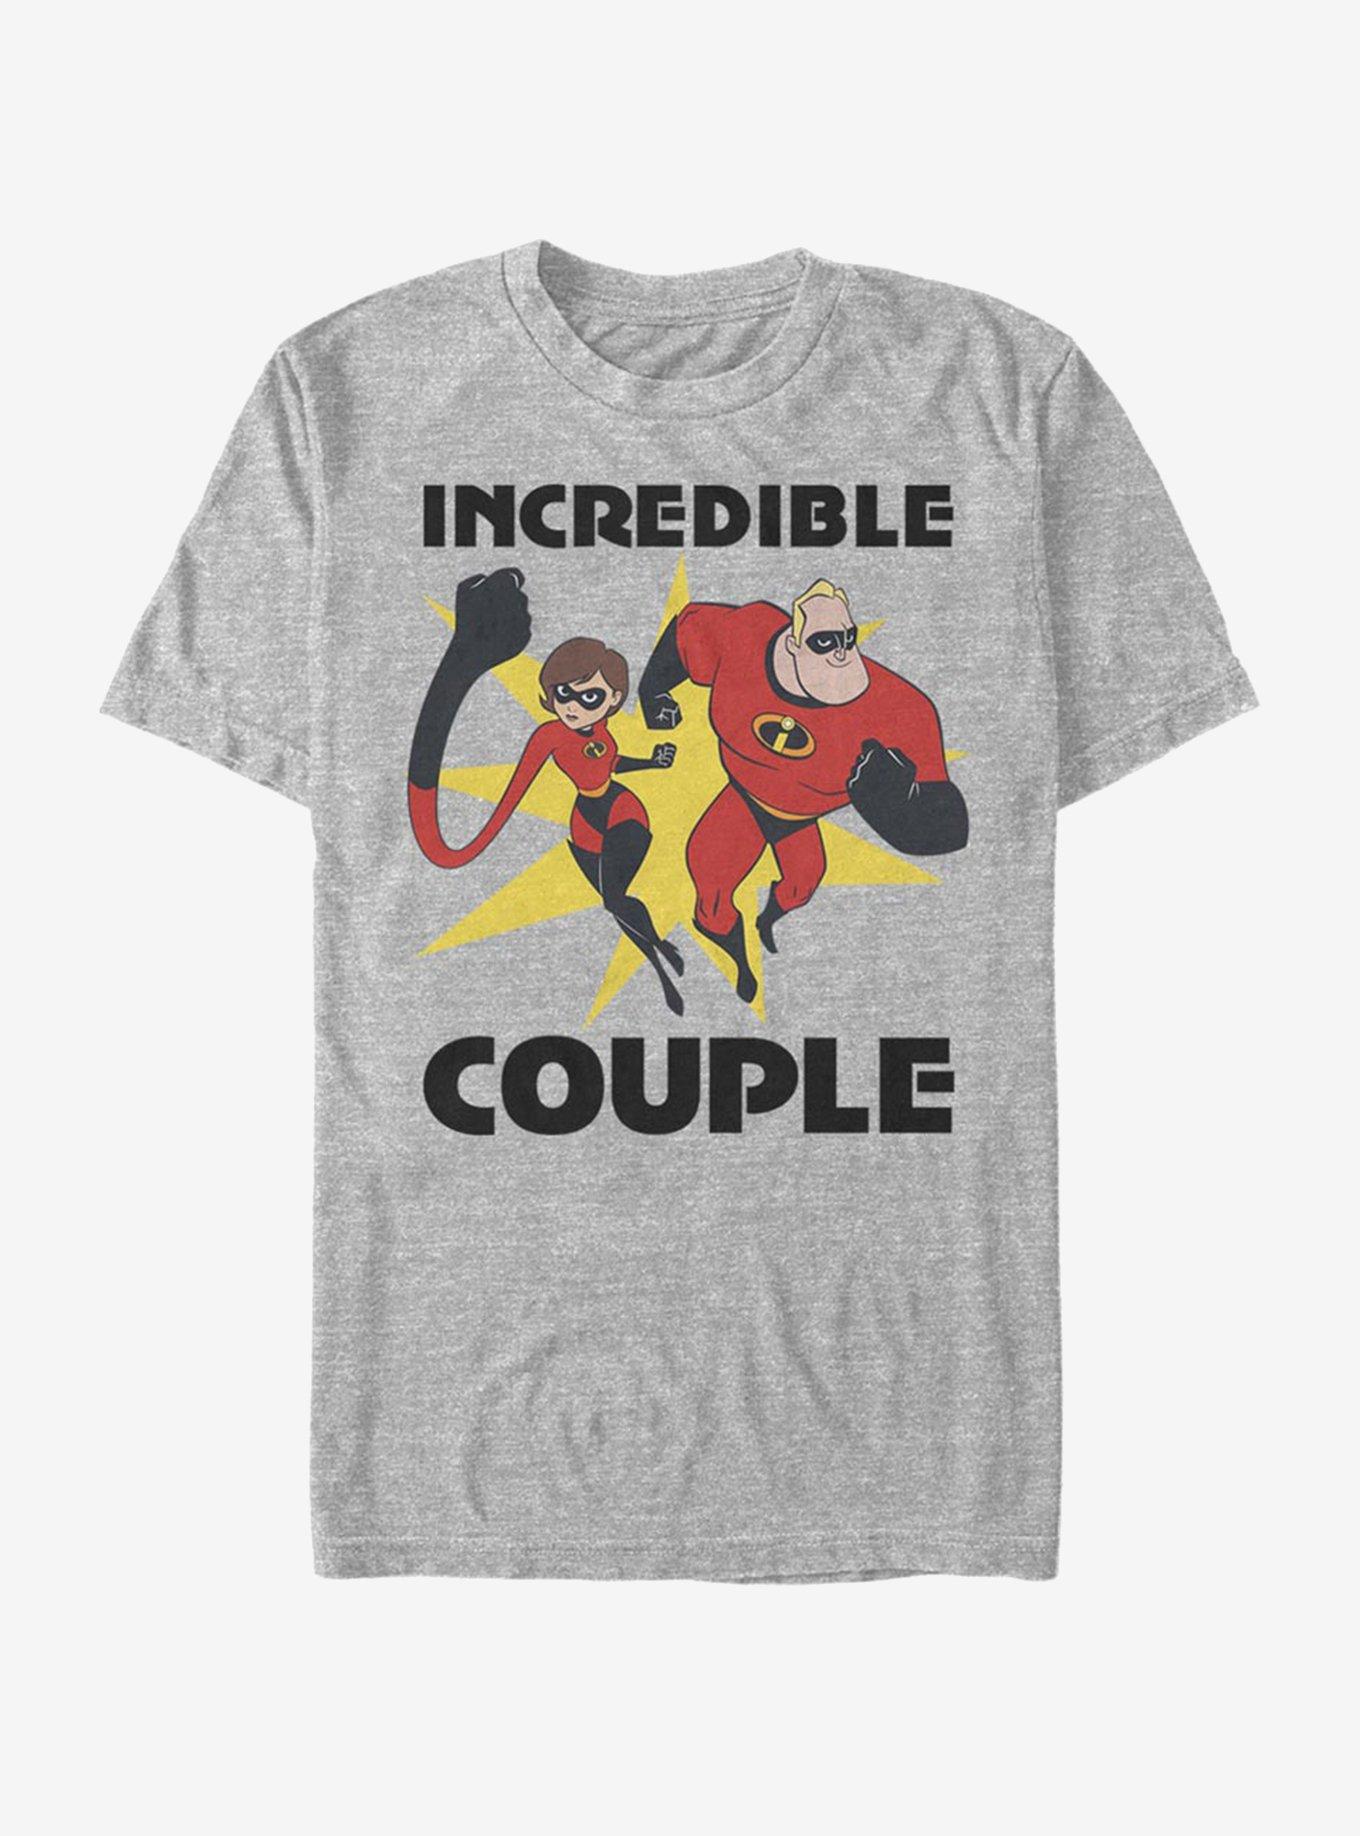 Disney Pixar The Incredibles Incredible Couple T-Shirt